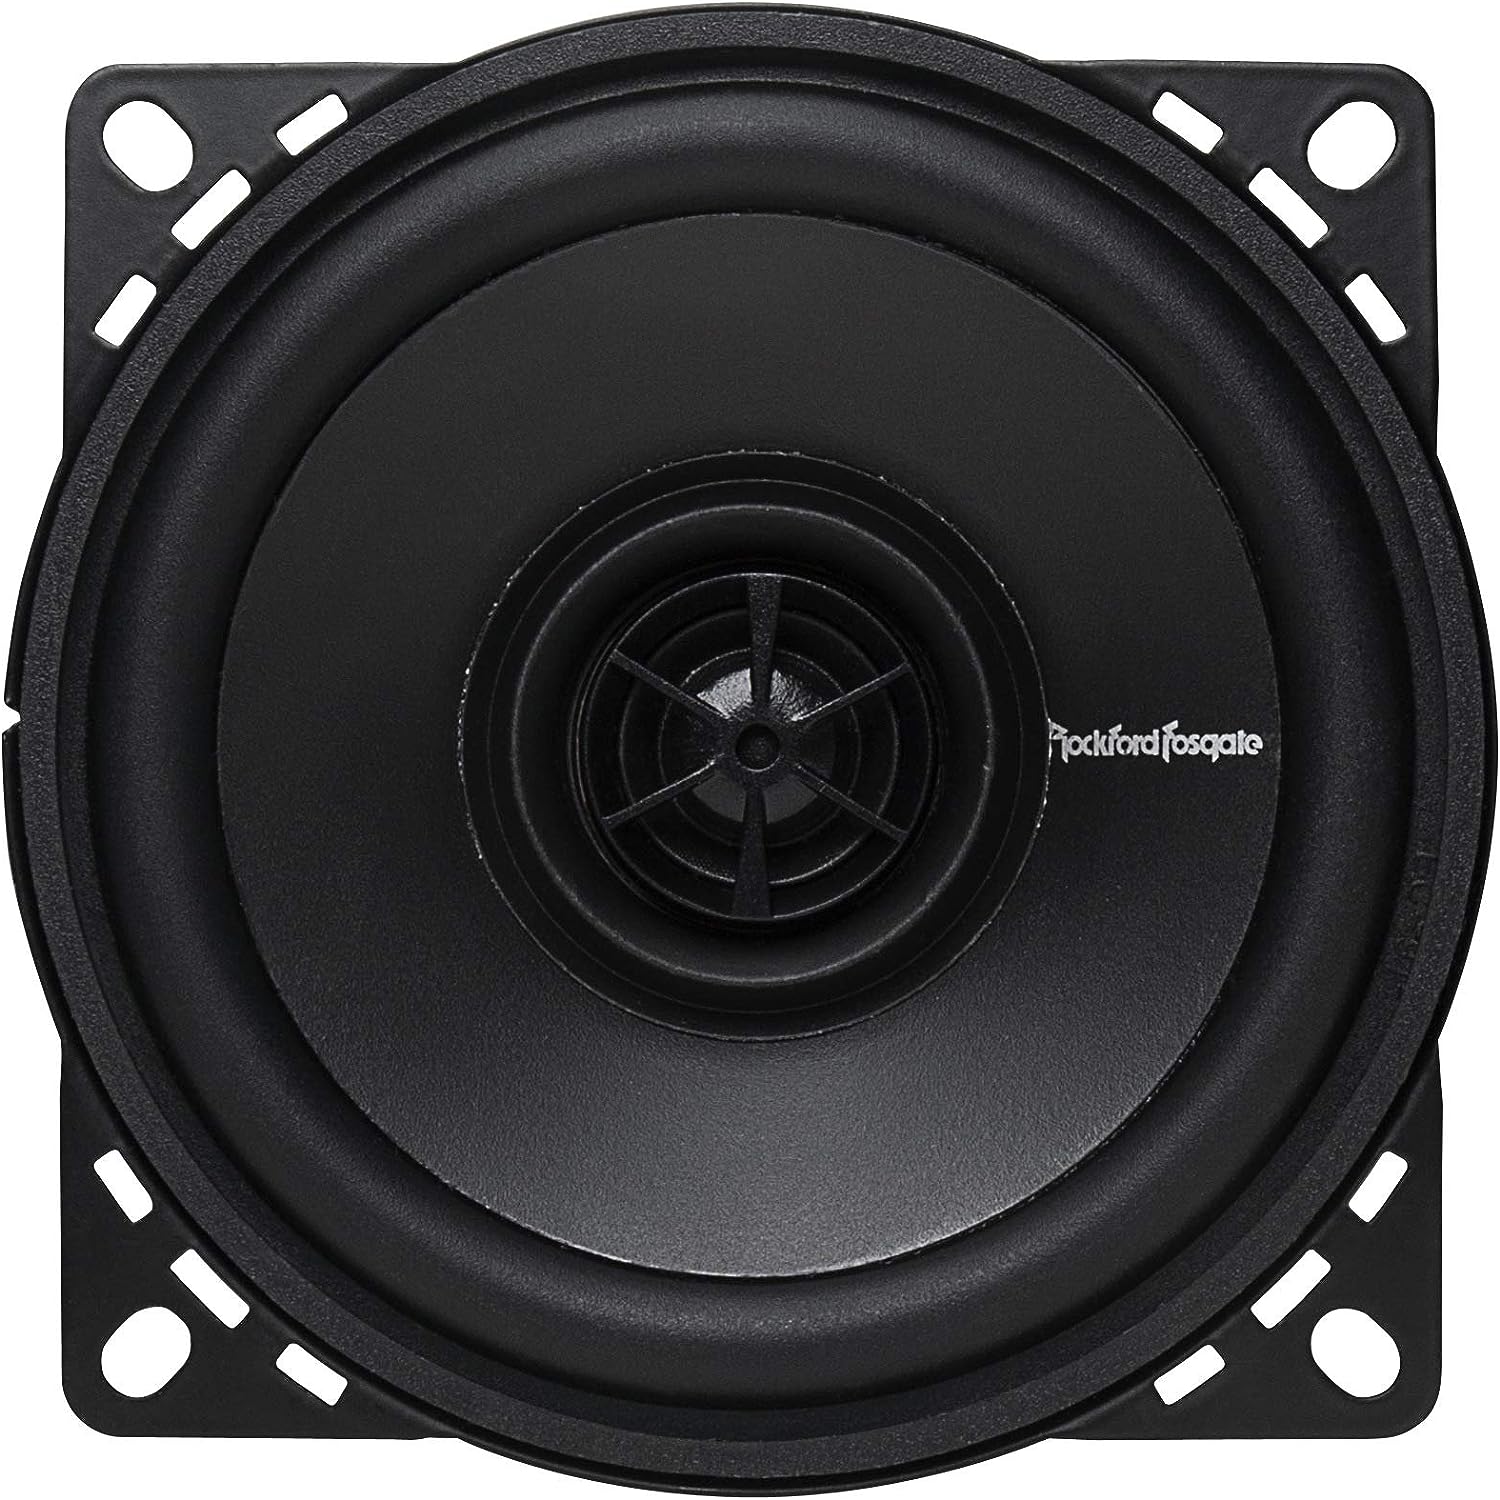 Rockford Fosgate R14X2 4" Inch 120W 2-Way Car Stereo Speakers